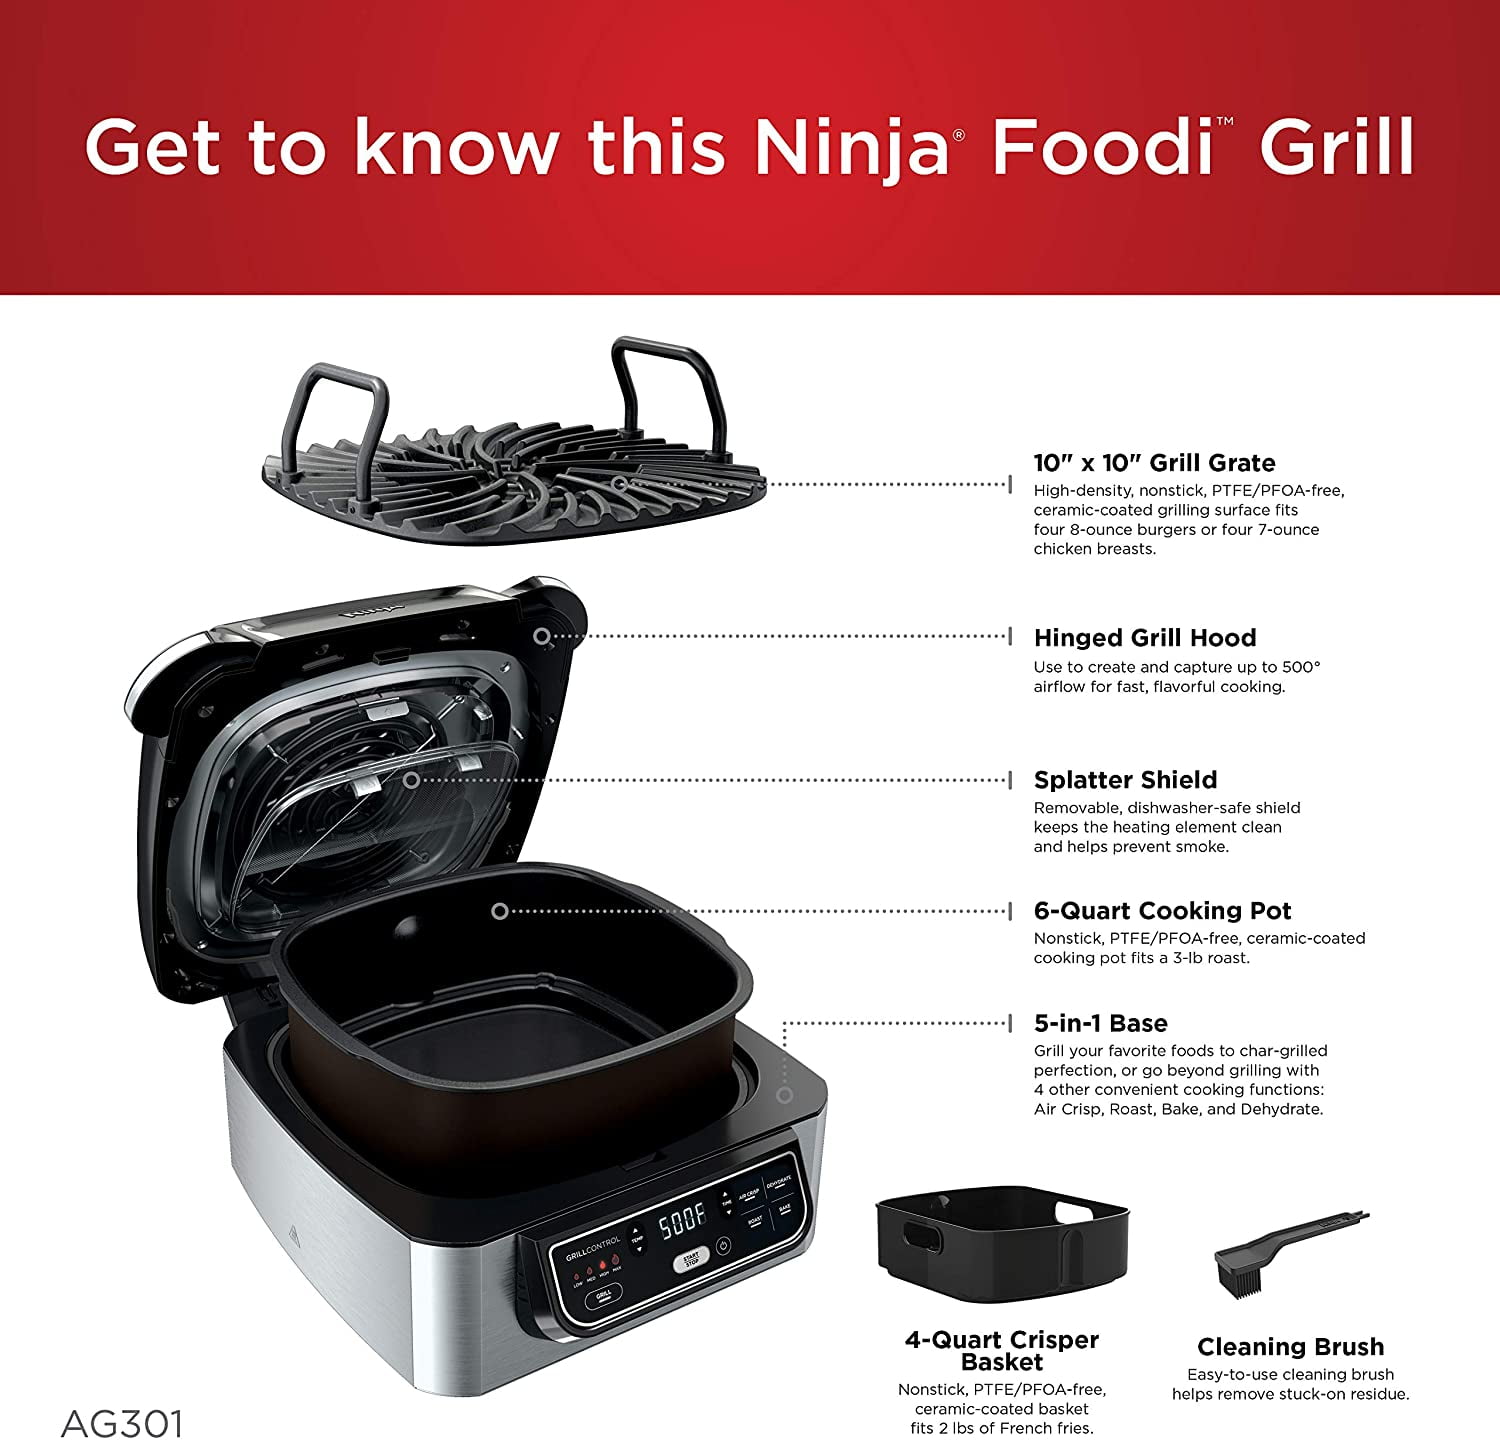 Air Fryer Bake & Dehydrate AG302 Roast NEW Ninja Foodi 5-in-1 Indoor Grill